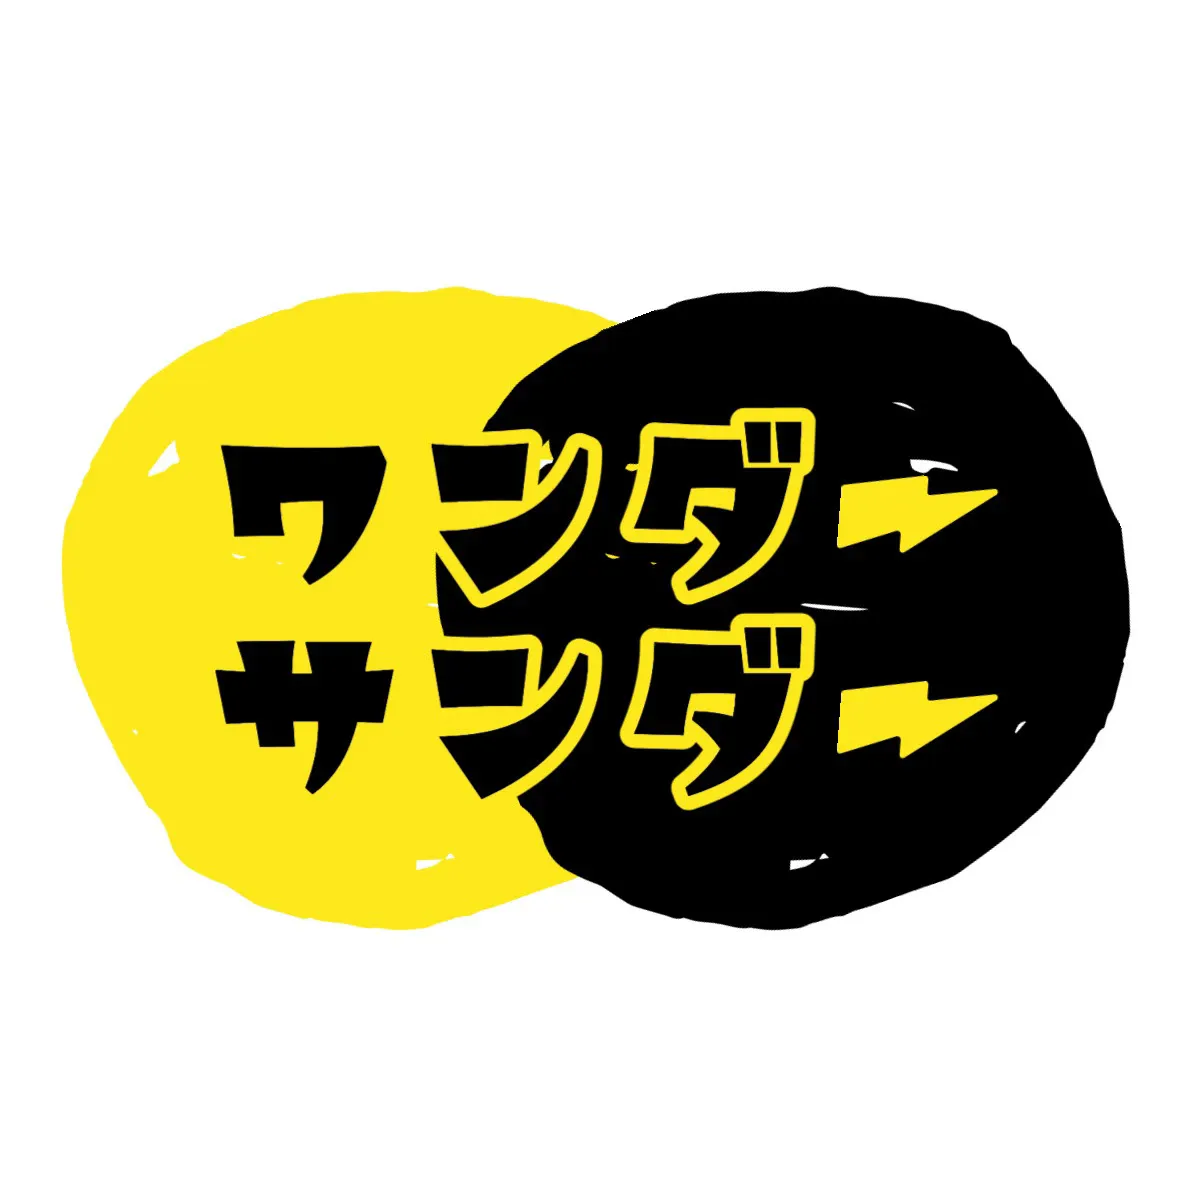 Yellow and black thunder band logo